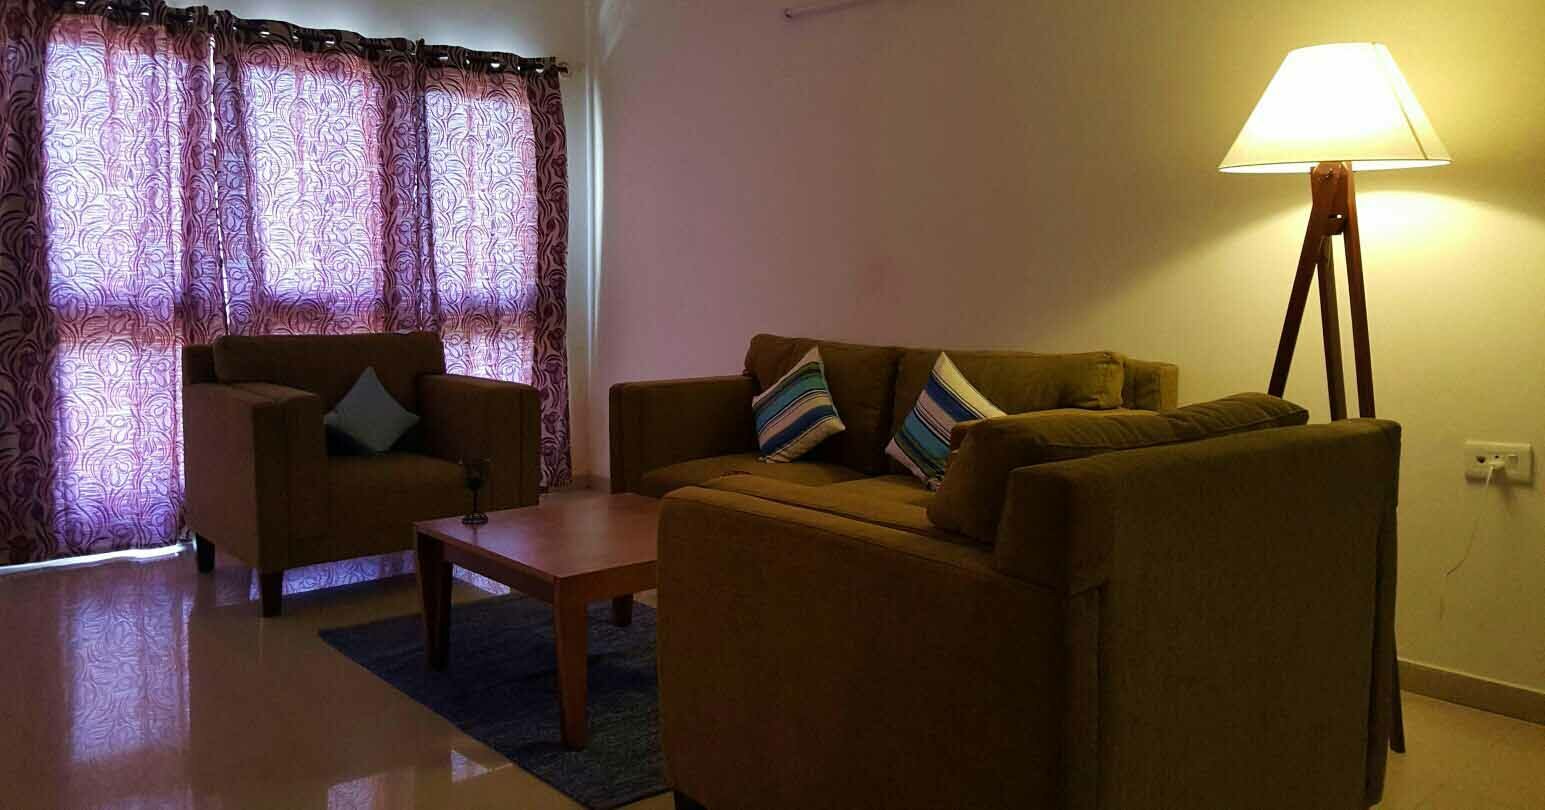 Serviced apartments near Bangalore Airport